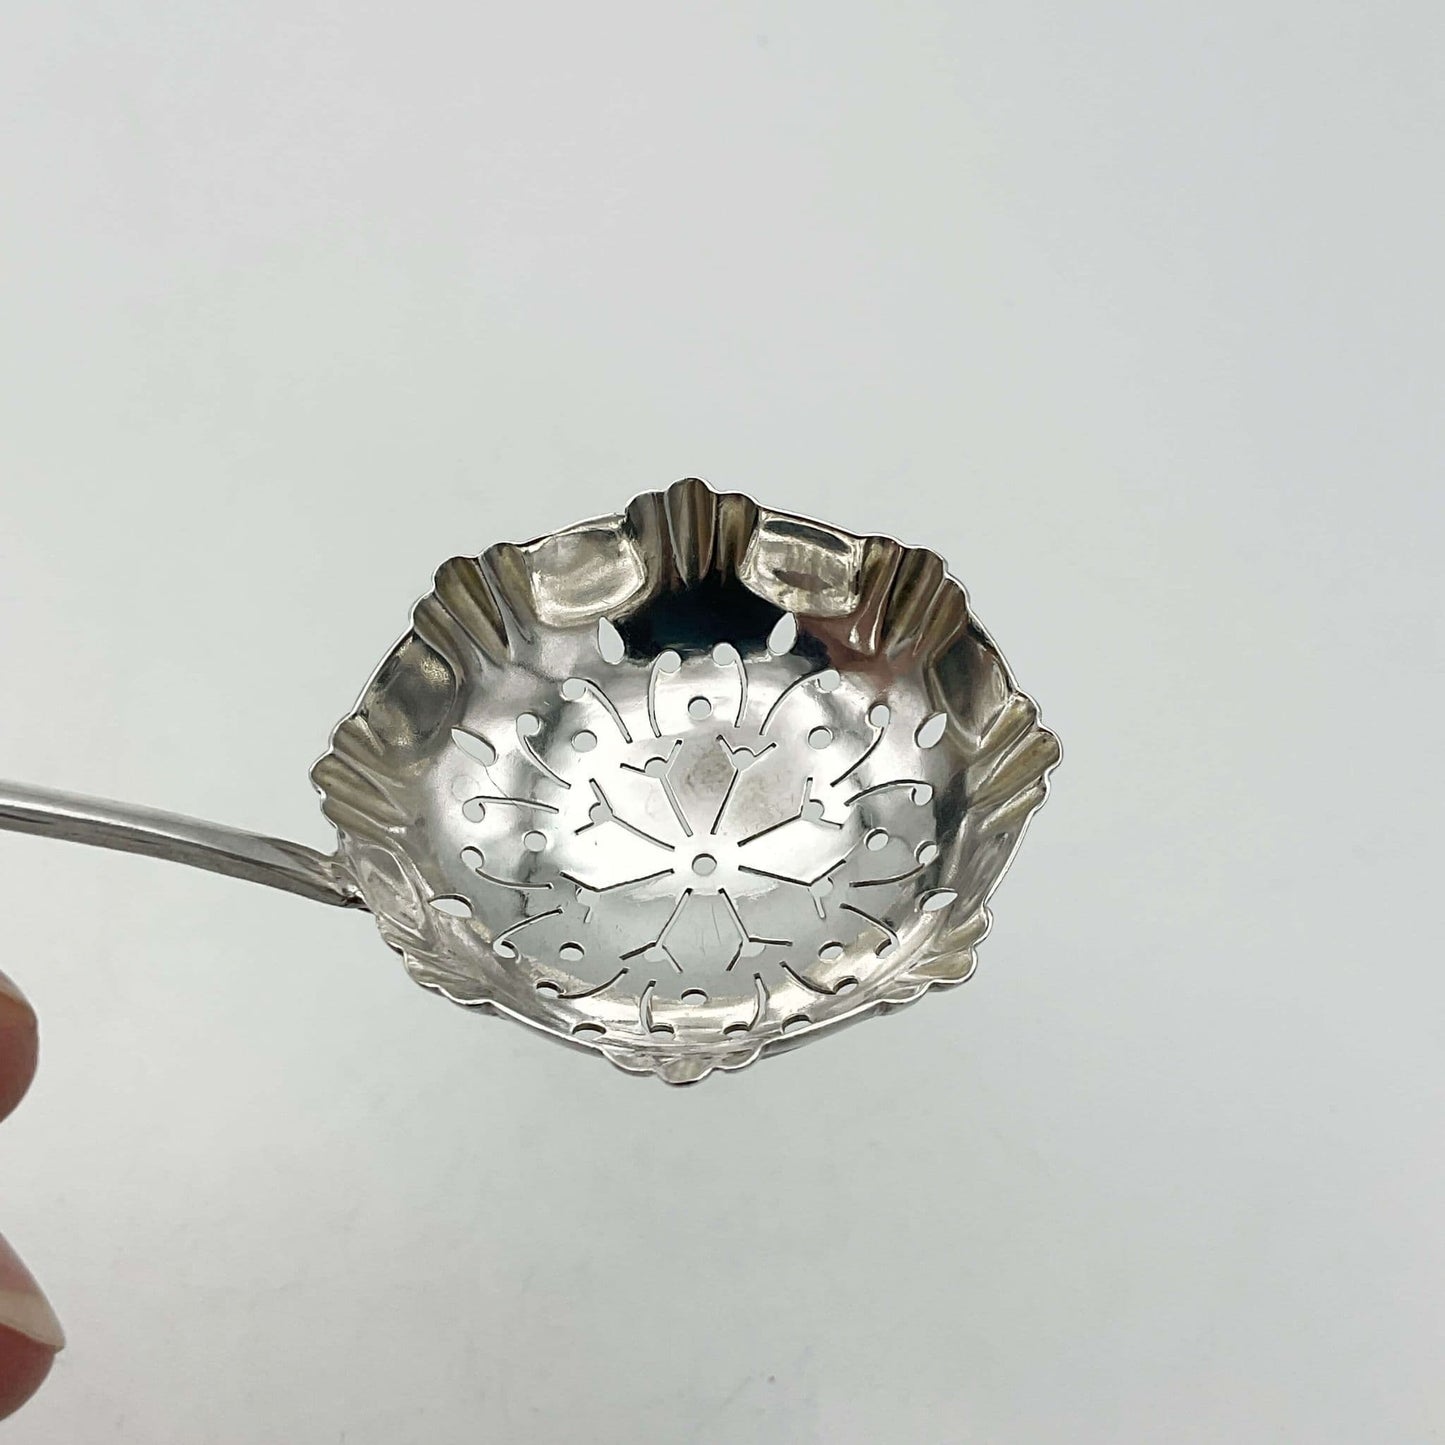 Antique Silver Sugar Sifter Spoon Hallmarked 1894